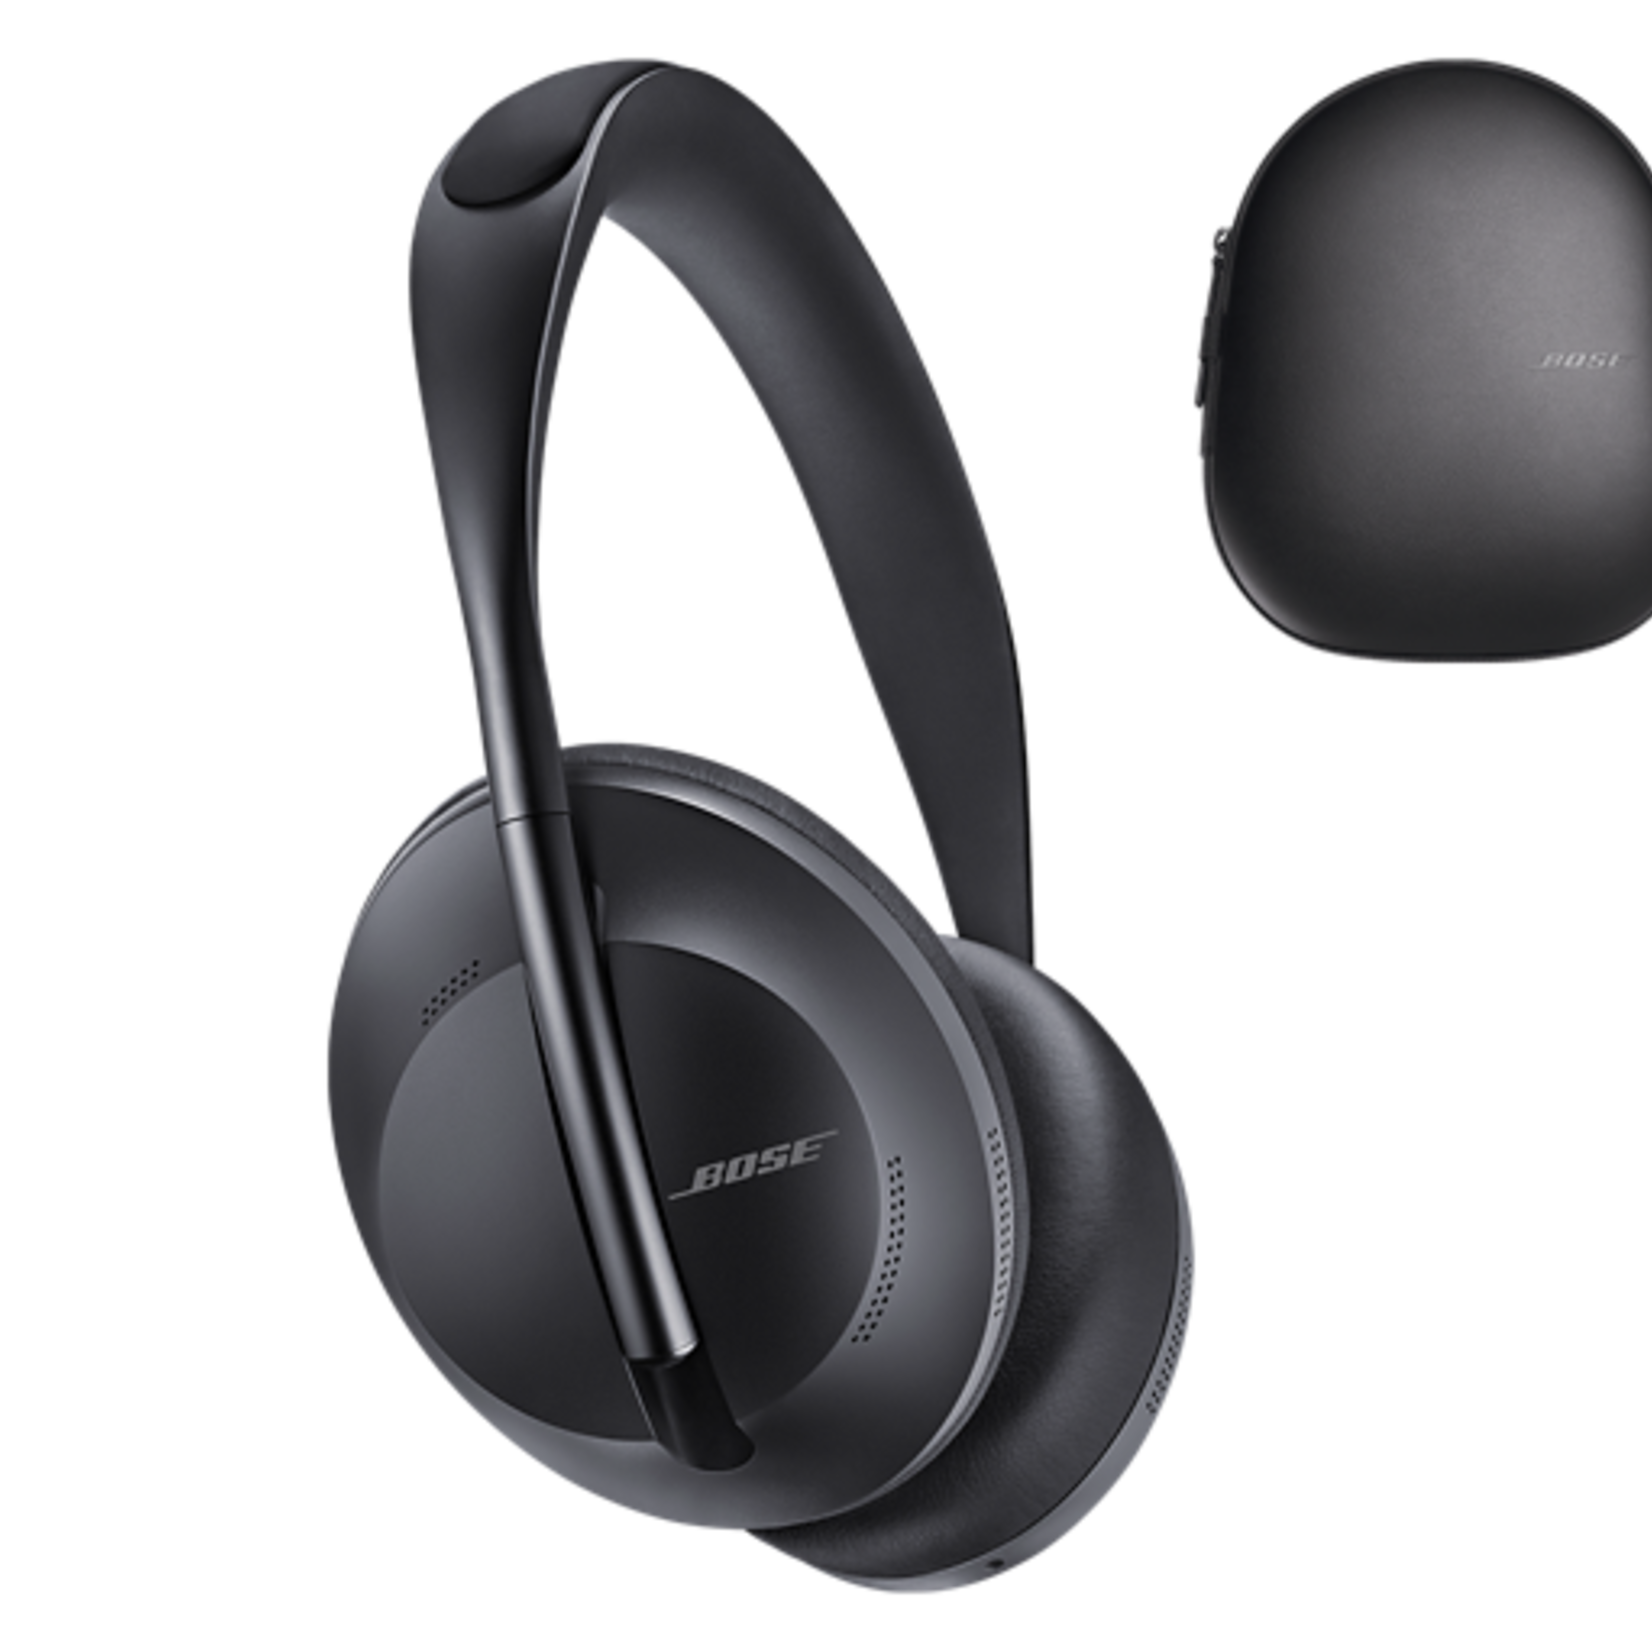 Bose Noise Cancelling Headphones 700 + Charging Case